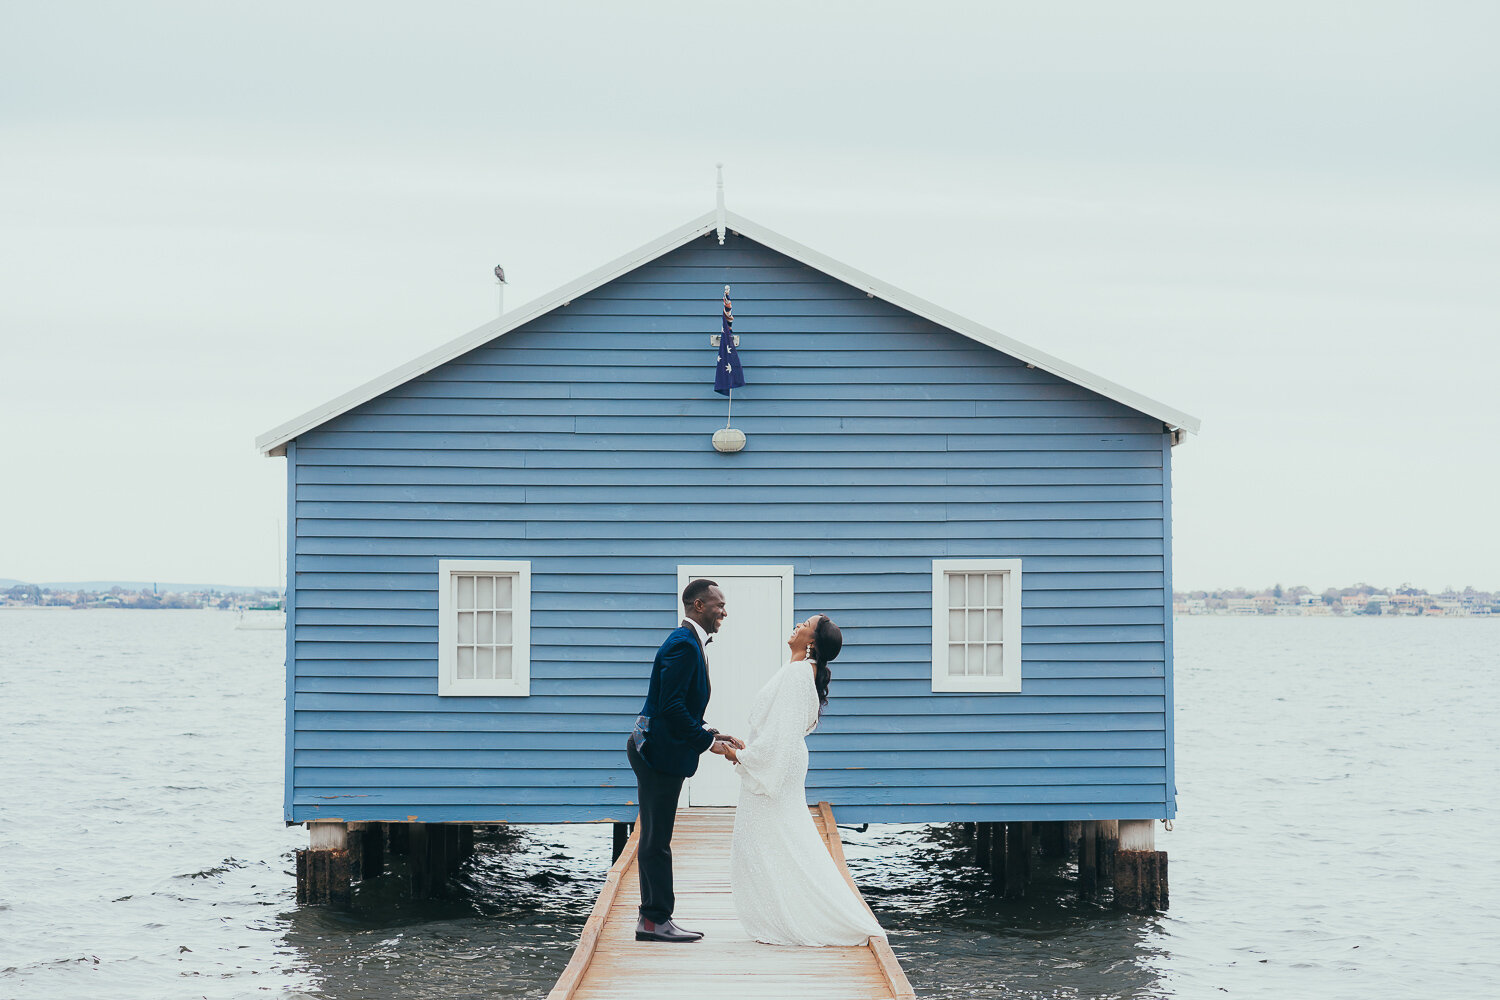 Rift Photography Perth Wedding Photographer Hire Australia-4036.jpg